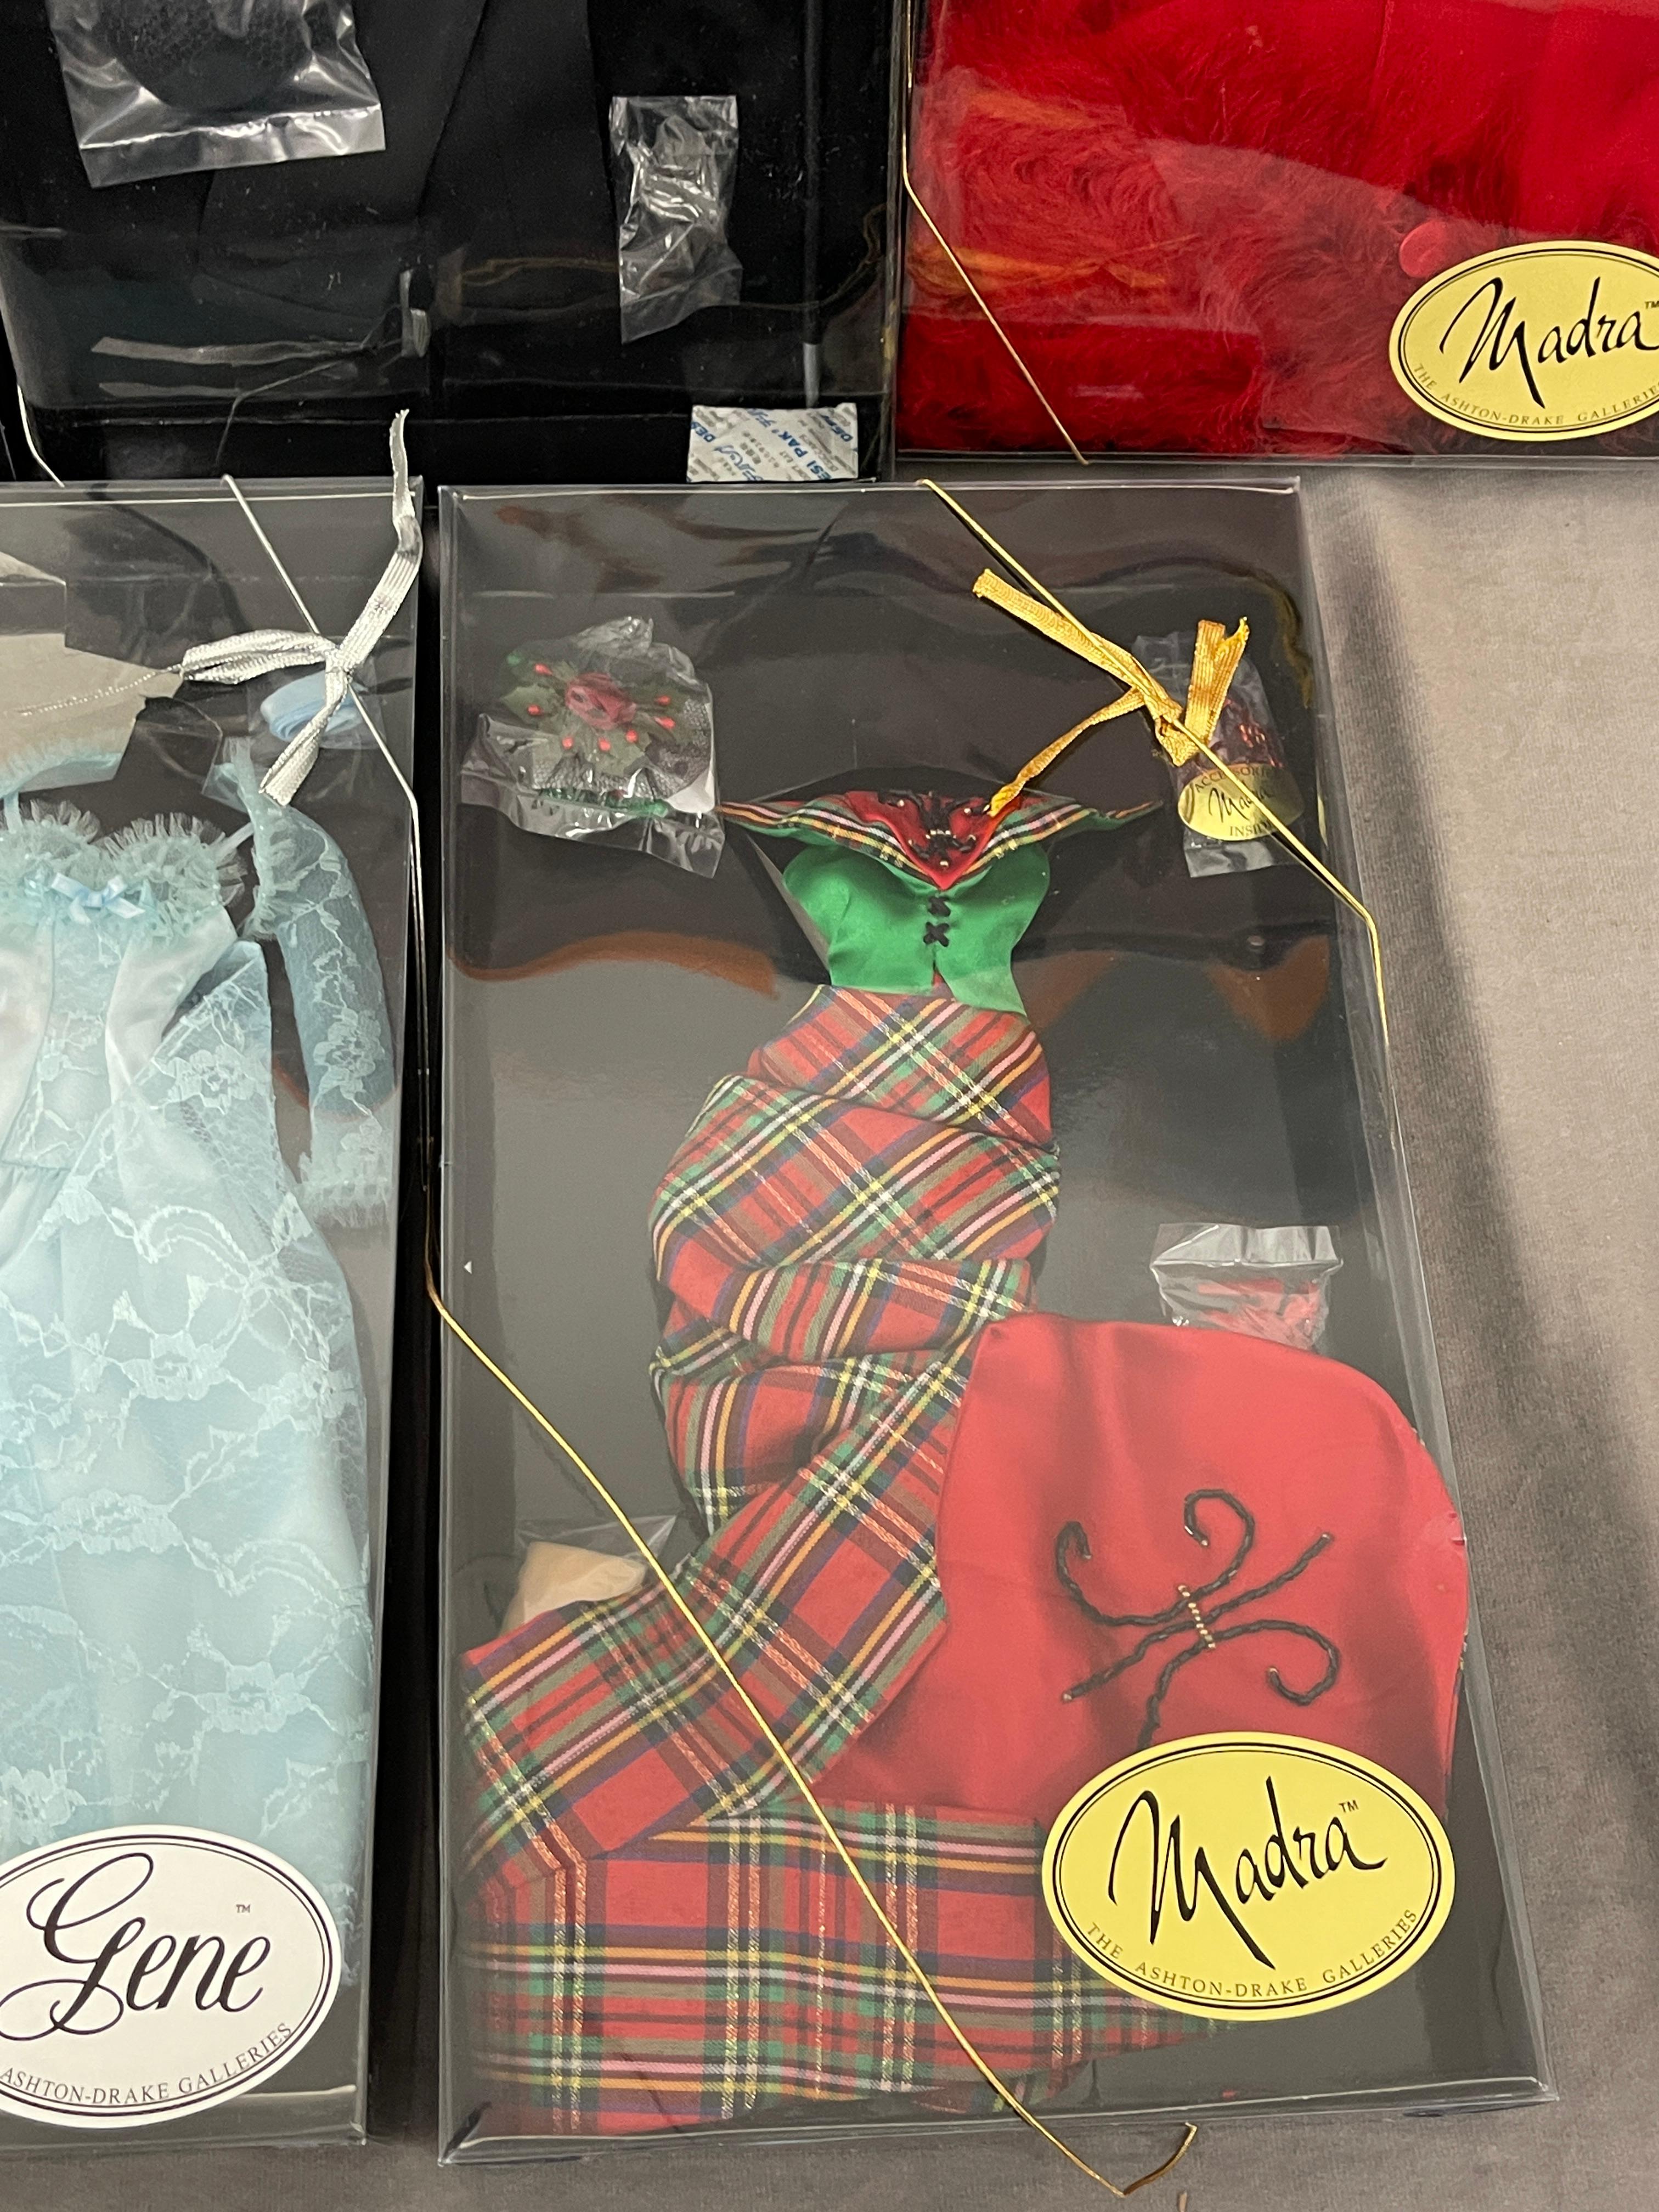 Gene Marshall Doll Fashion Costume Ashton Drake New in Box Collection Lot